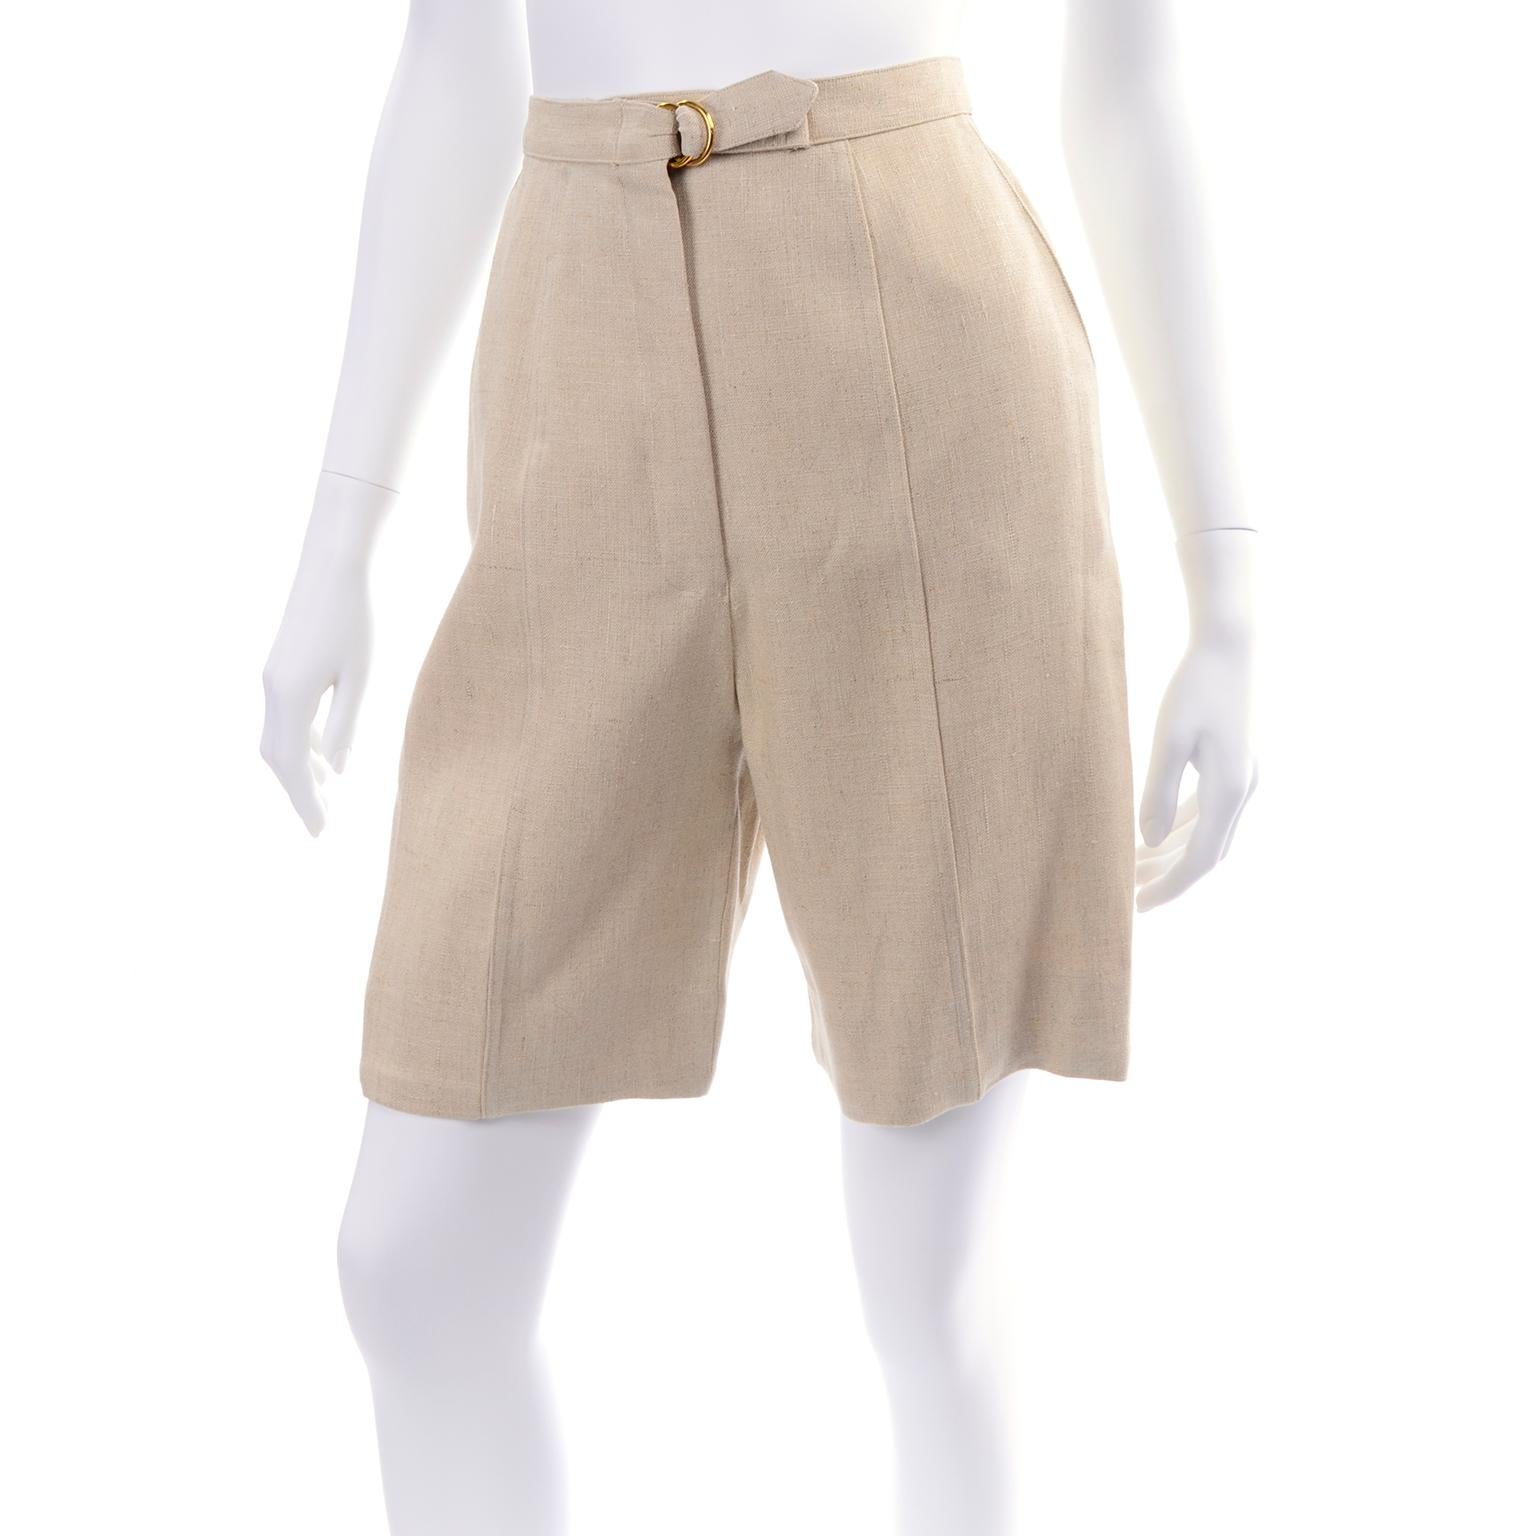 1950s Bill Atkinson Glen of Michigan Tan Linen Jacket & High Rise Shorts Suit  2